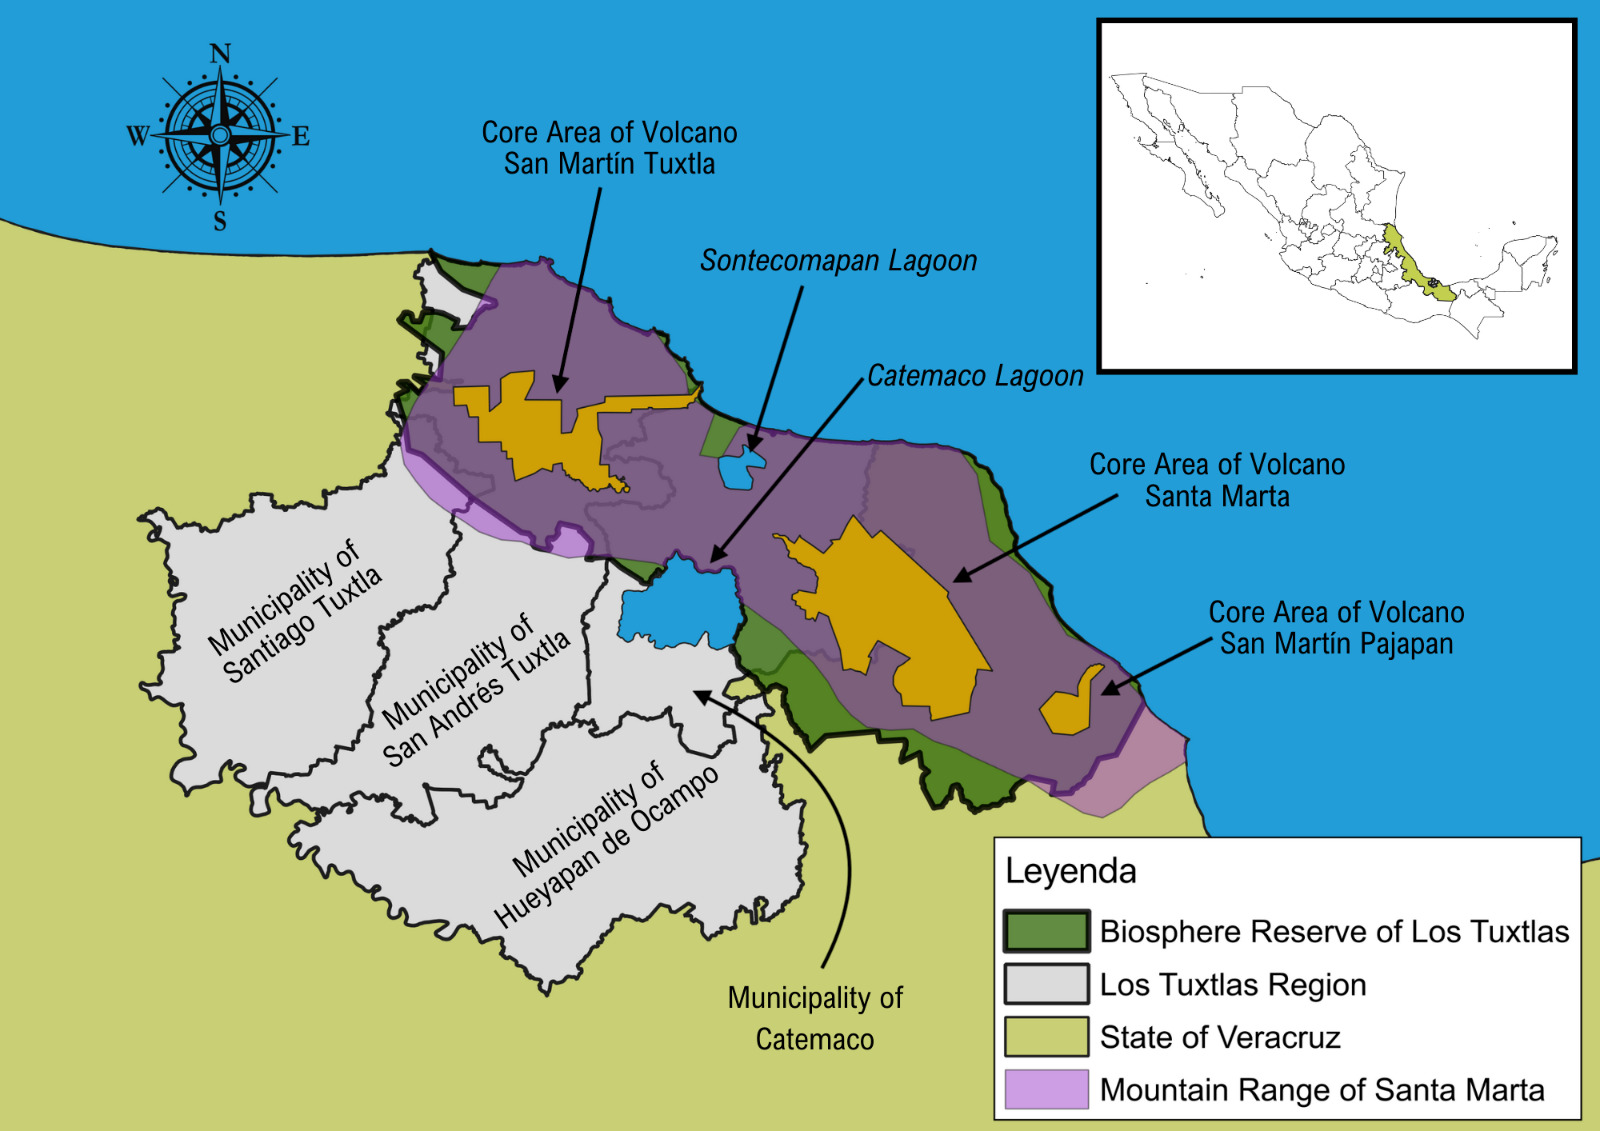 Colour-coded map of the location of the Sierra de Santa Marta, the Los Tuxtlas region, and the Los Tuxtlas Biosphere Reserve in southern Veracruz, Mexico. Designed by Jazmín Solís Carpio, based on INEGI maps.